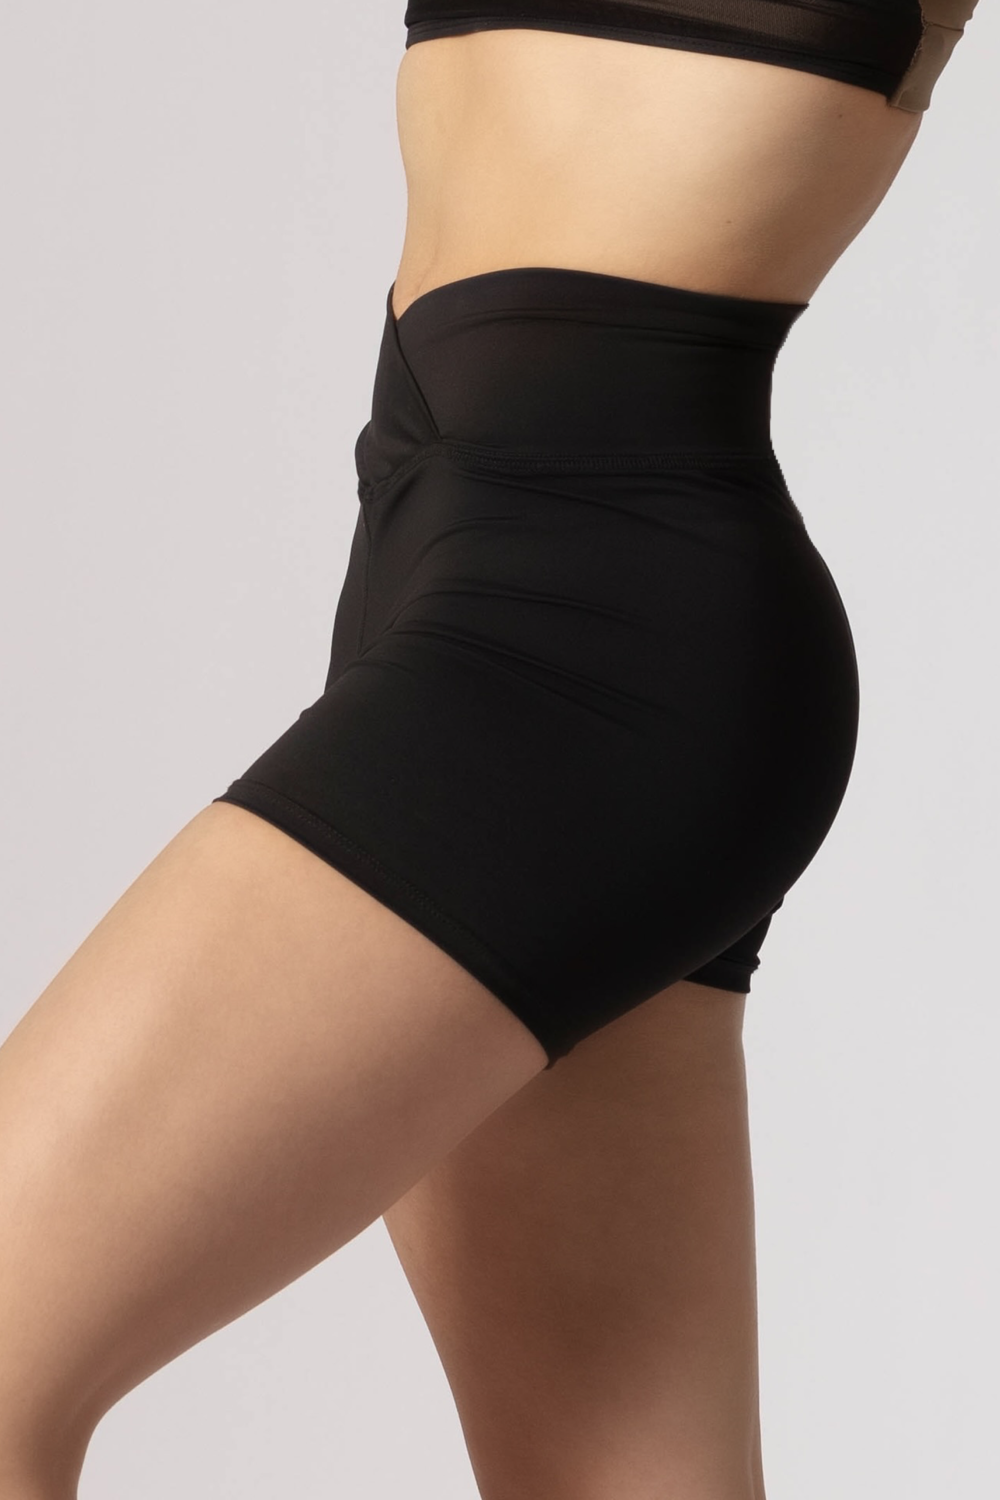 Tiger Friday Online Shop for Hot Cross Triker Shorts - Black Dancewear | Size: CS